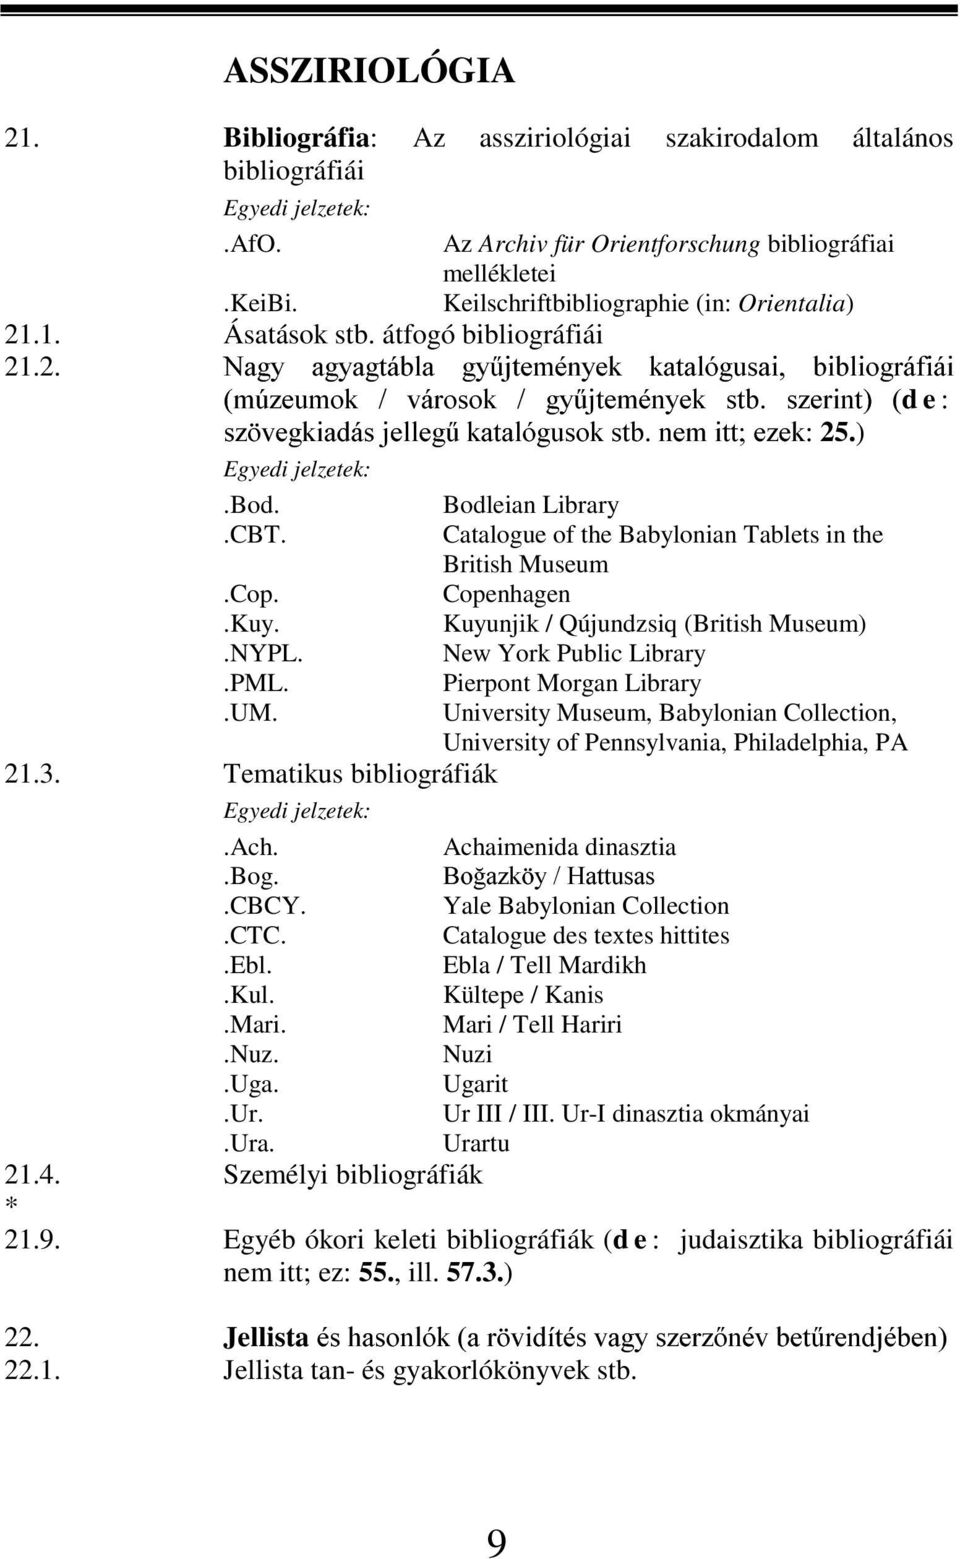 ) Egyedi jelzetek:.bod. Bodleian Library.CBT. Catalogue of the Babylonian Tablets in the British Museum.Cop. Copenhagen.Kuy. Kuyunjik / Qújundzsiq (British Museum).NYPL. New York Public Library.PML.